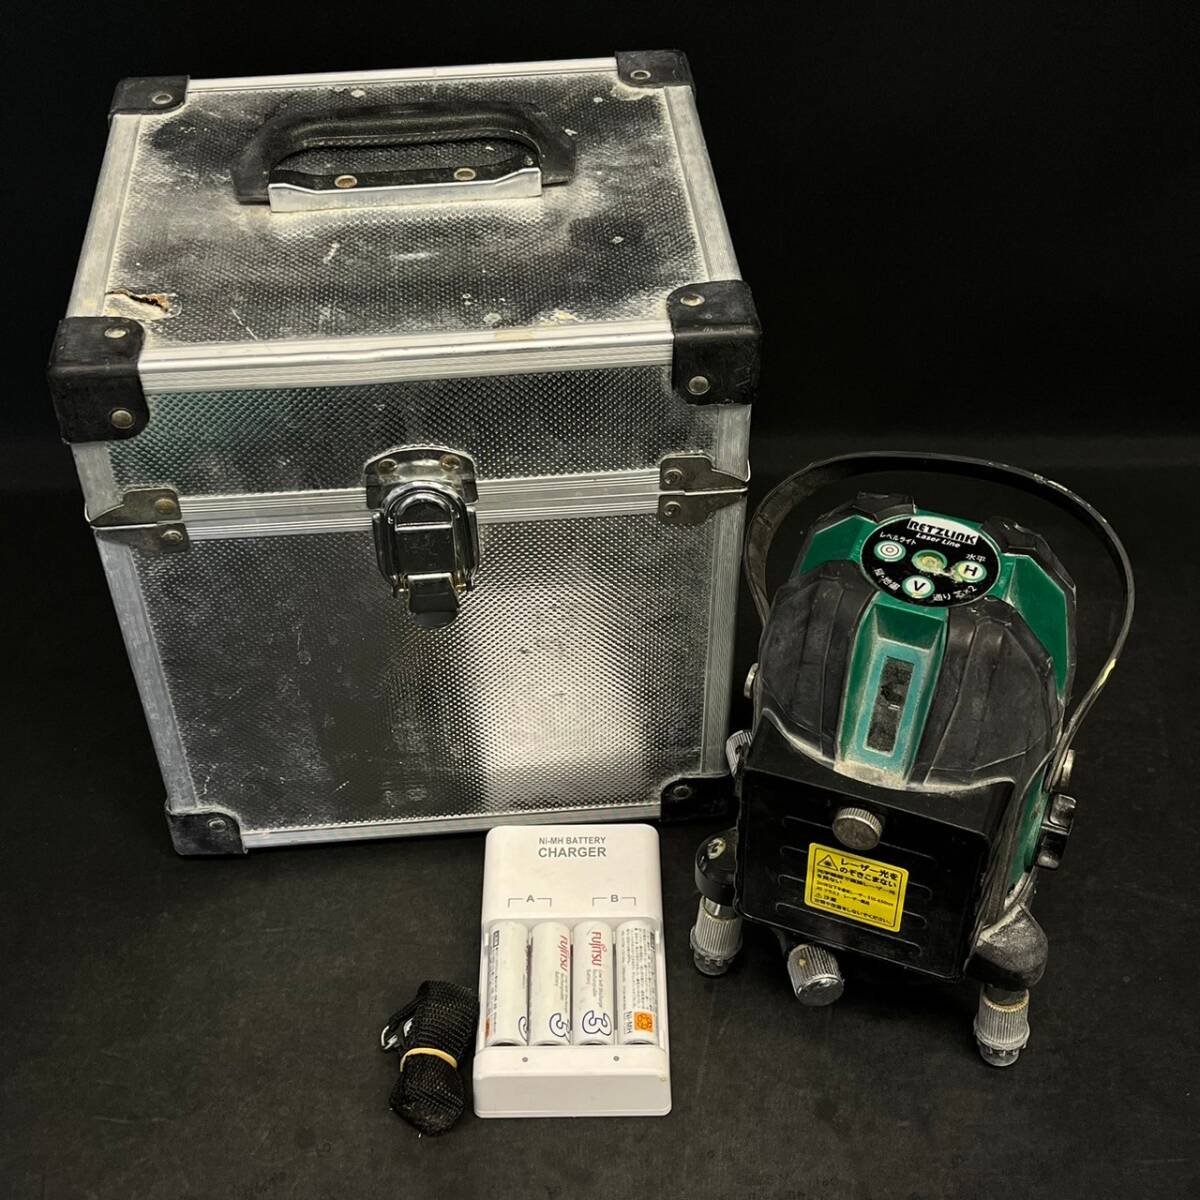 BCd170R 80 RETZLINK RZ-LXG5 Laser Line レーザーライン 墨出器 4V1H地墨 乾電池式 グリーンレーザー ケース付き 工具 測定器の画像1